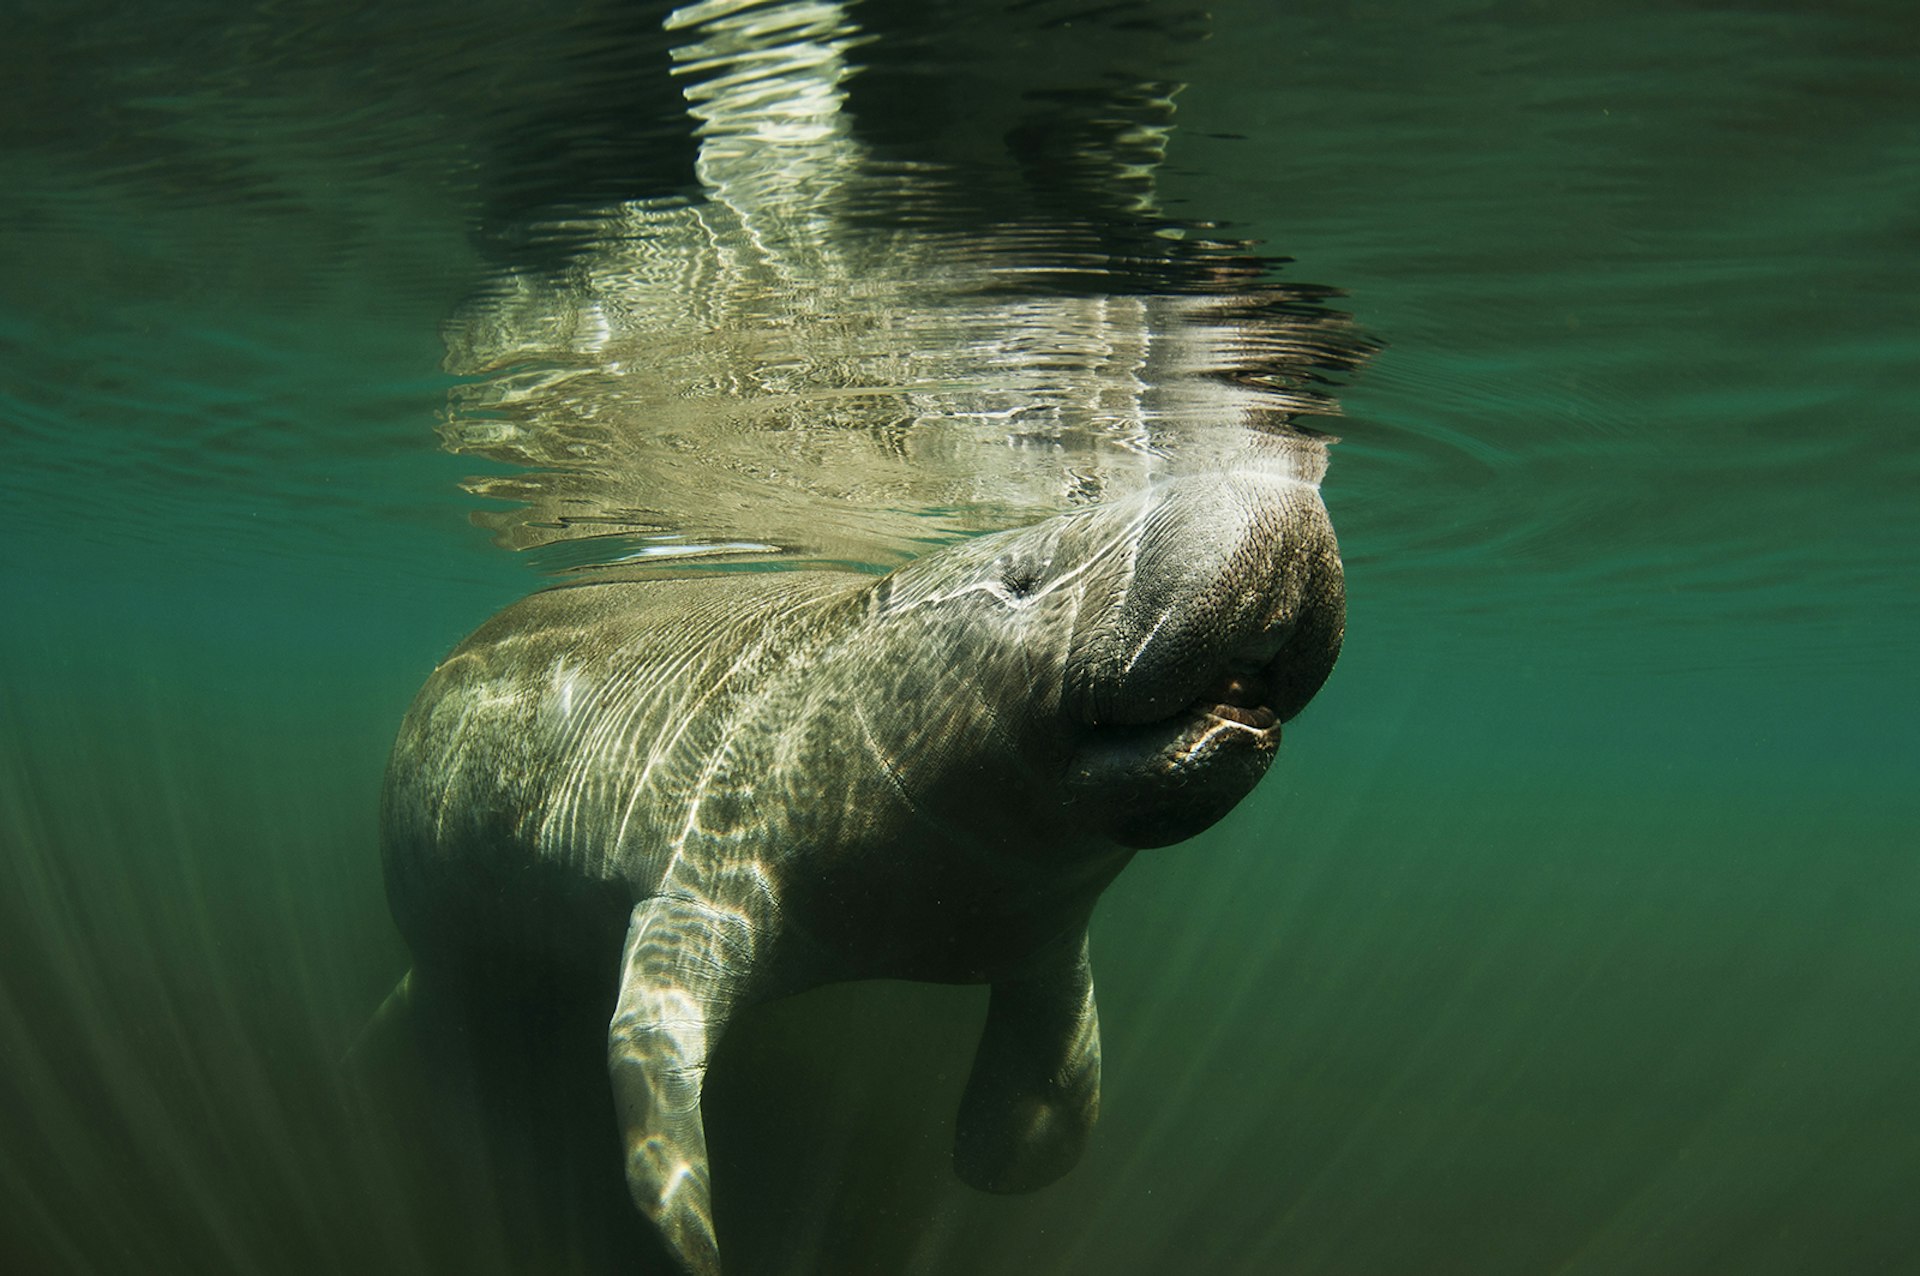 Underwater image of a manatee in Homosassa river, Florida.